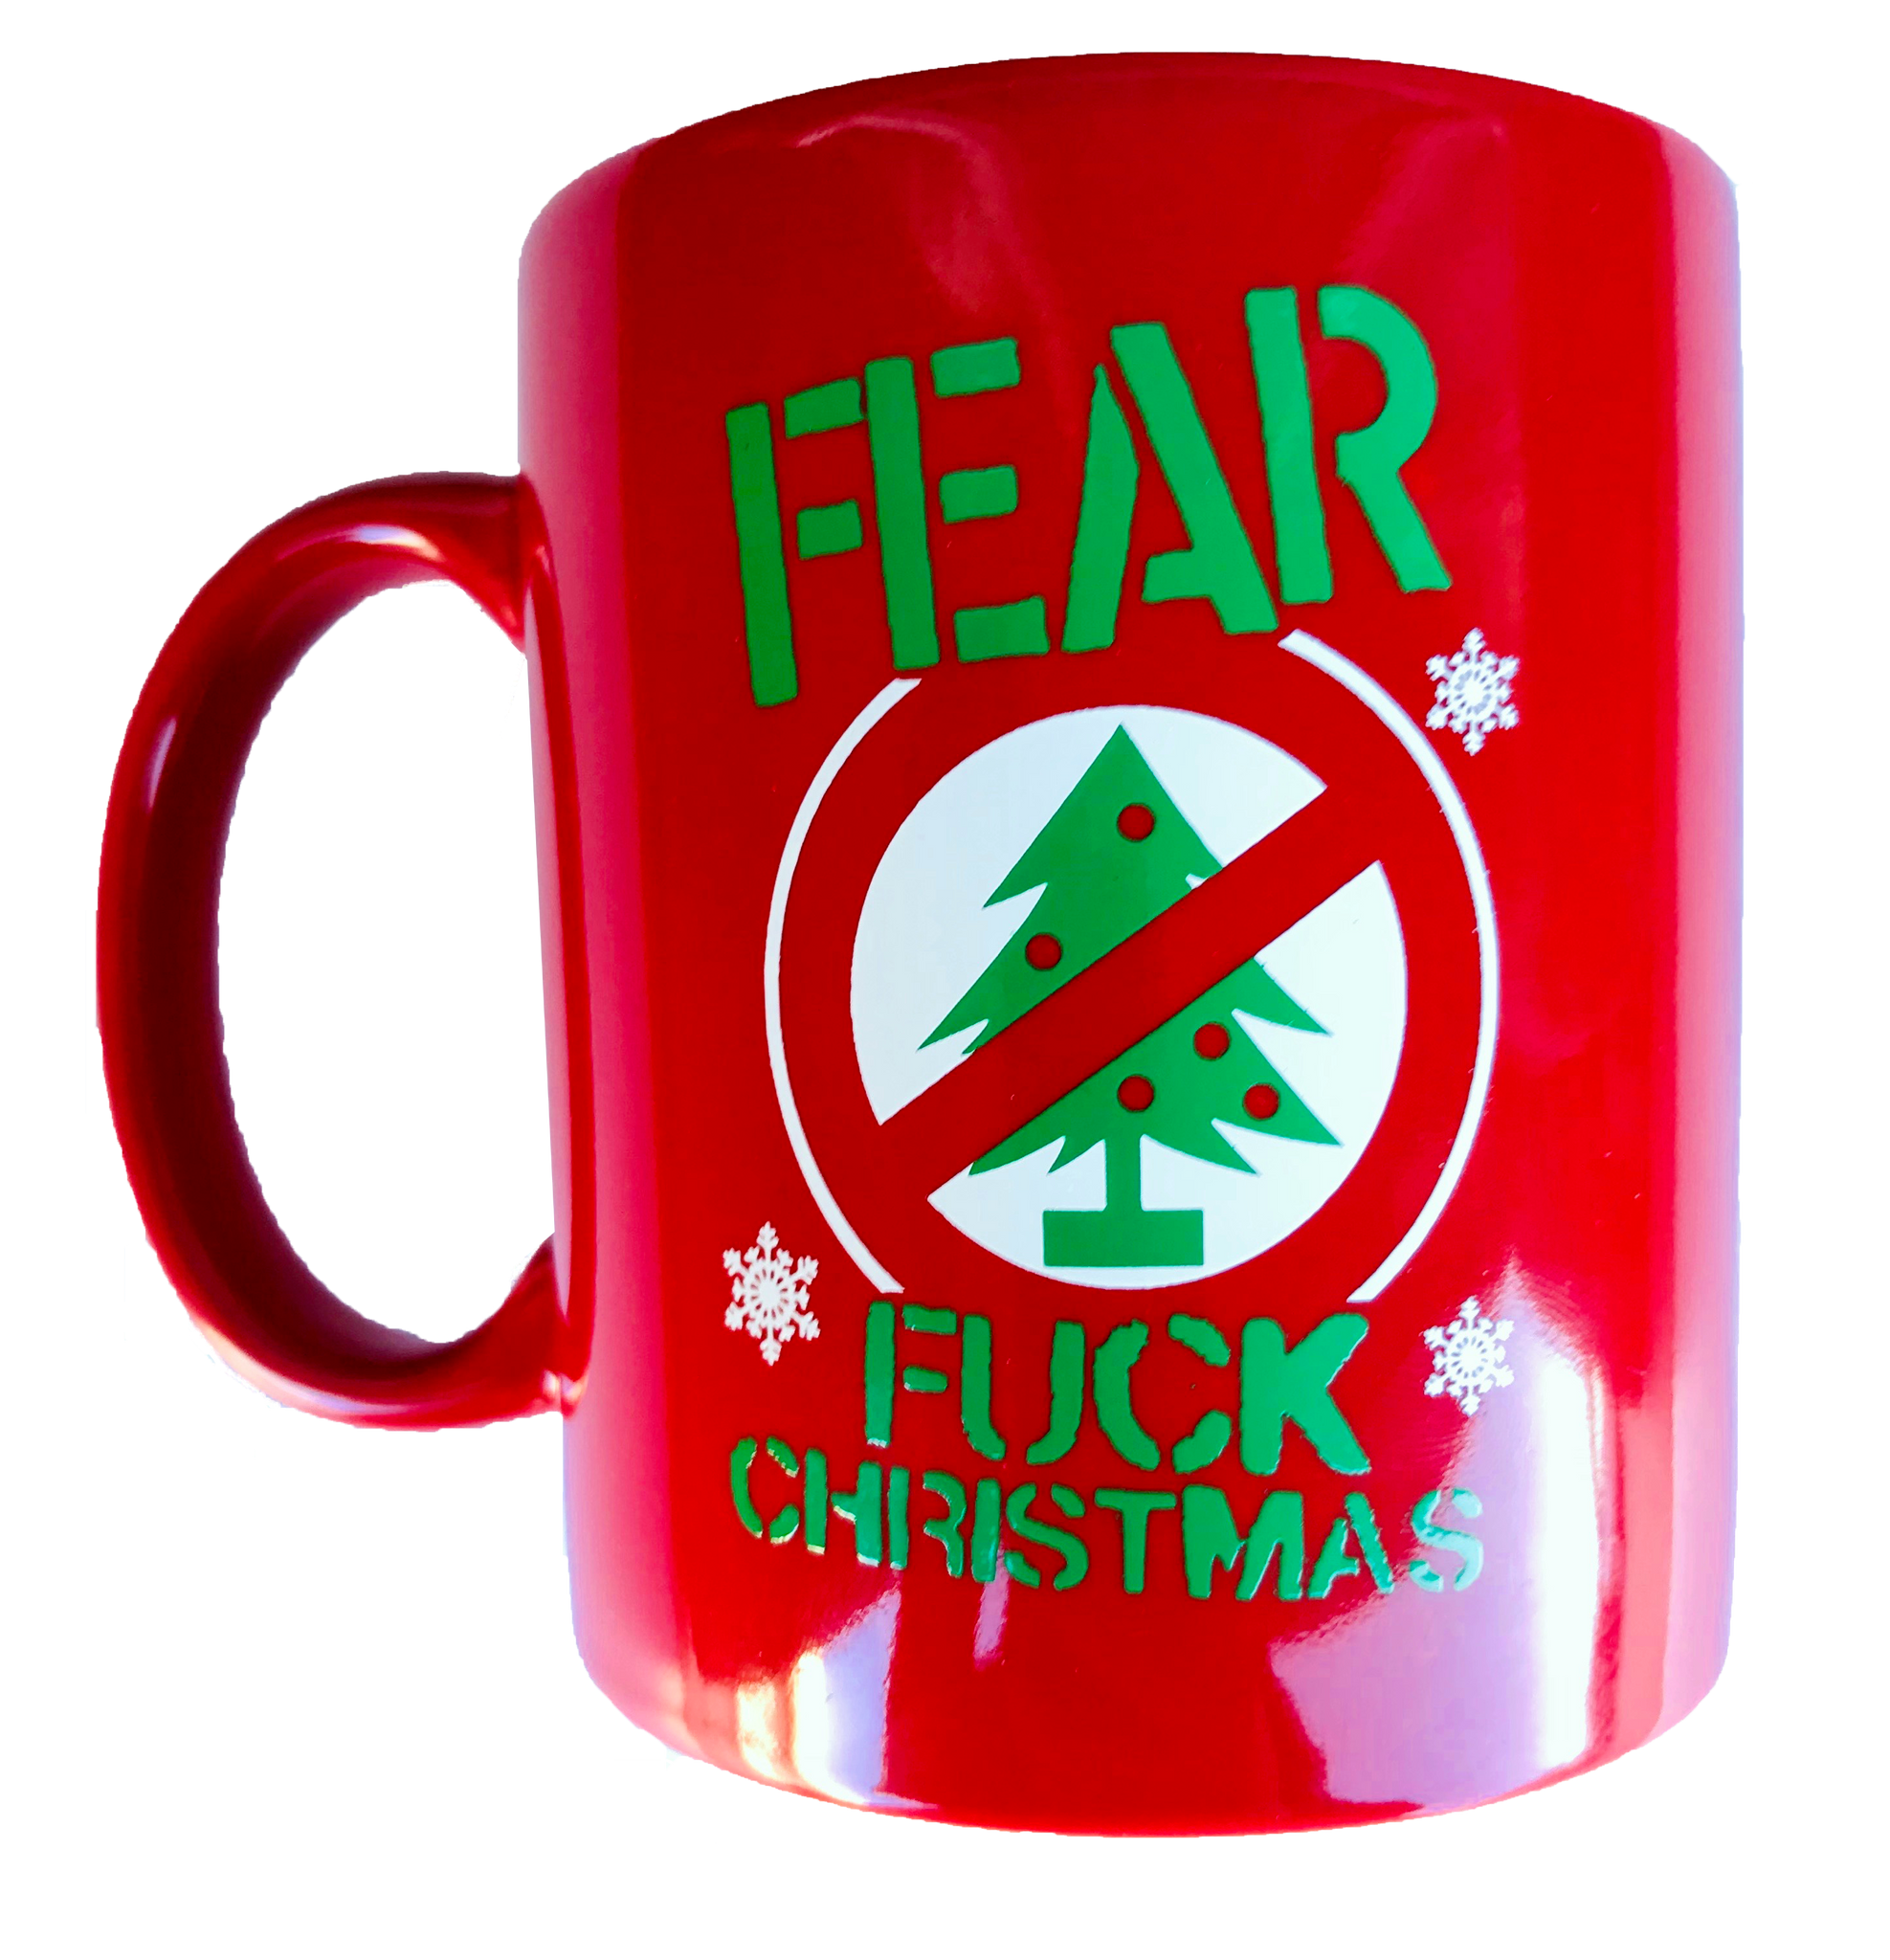 FEAR: "FUCK CHRISTMAS" COFFEE MUG